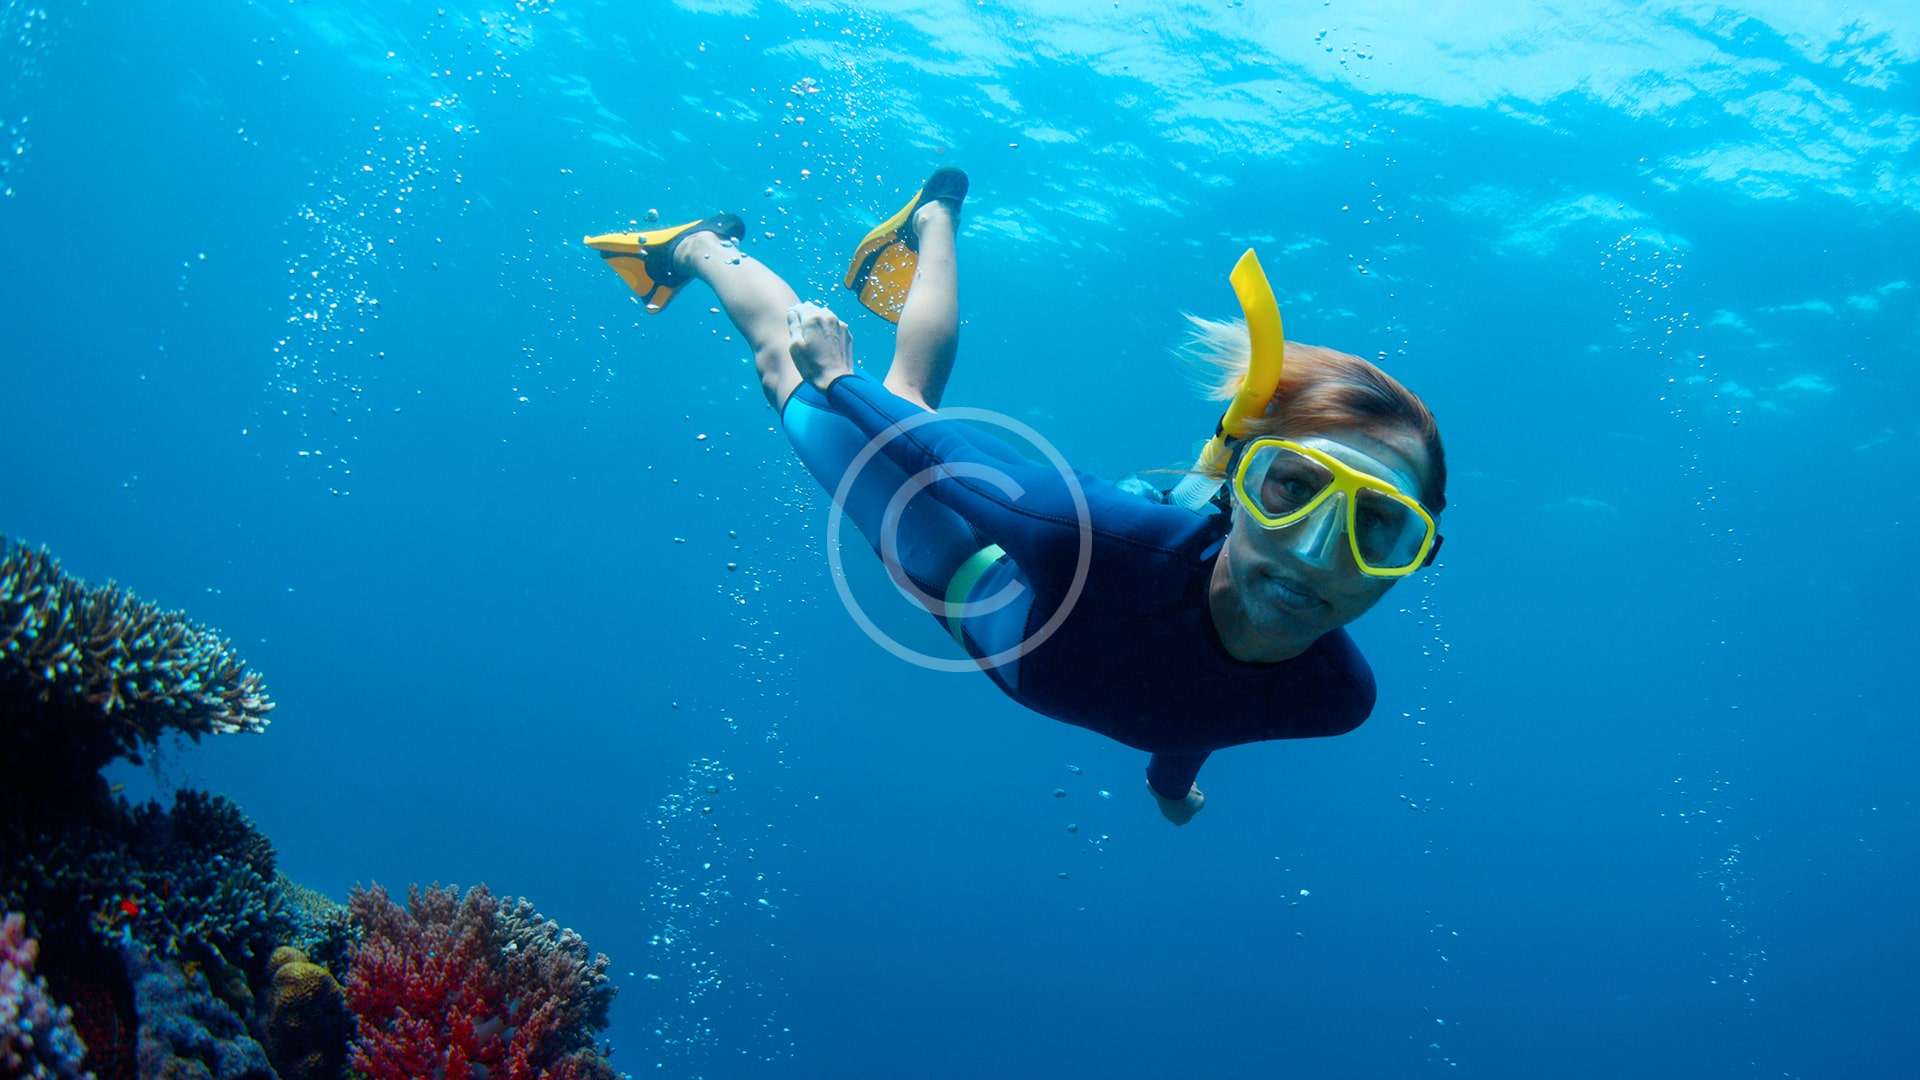 A diver going deep the ocean